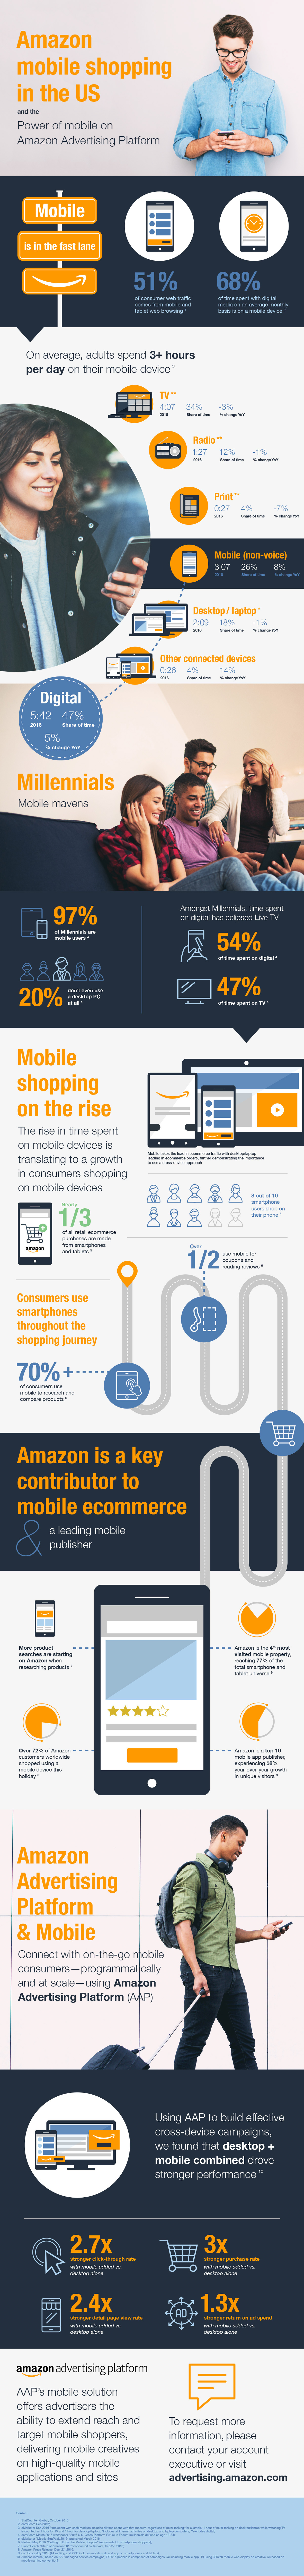 Amazon Amazon Advertising mobile apps Shopping infographics infographic Advertising  Platform millennials